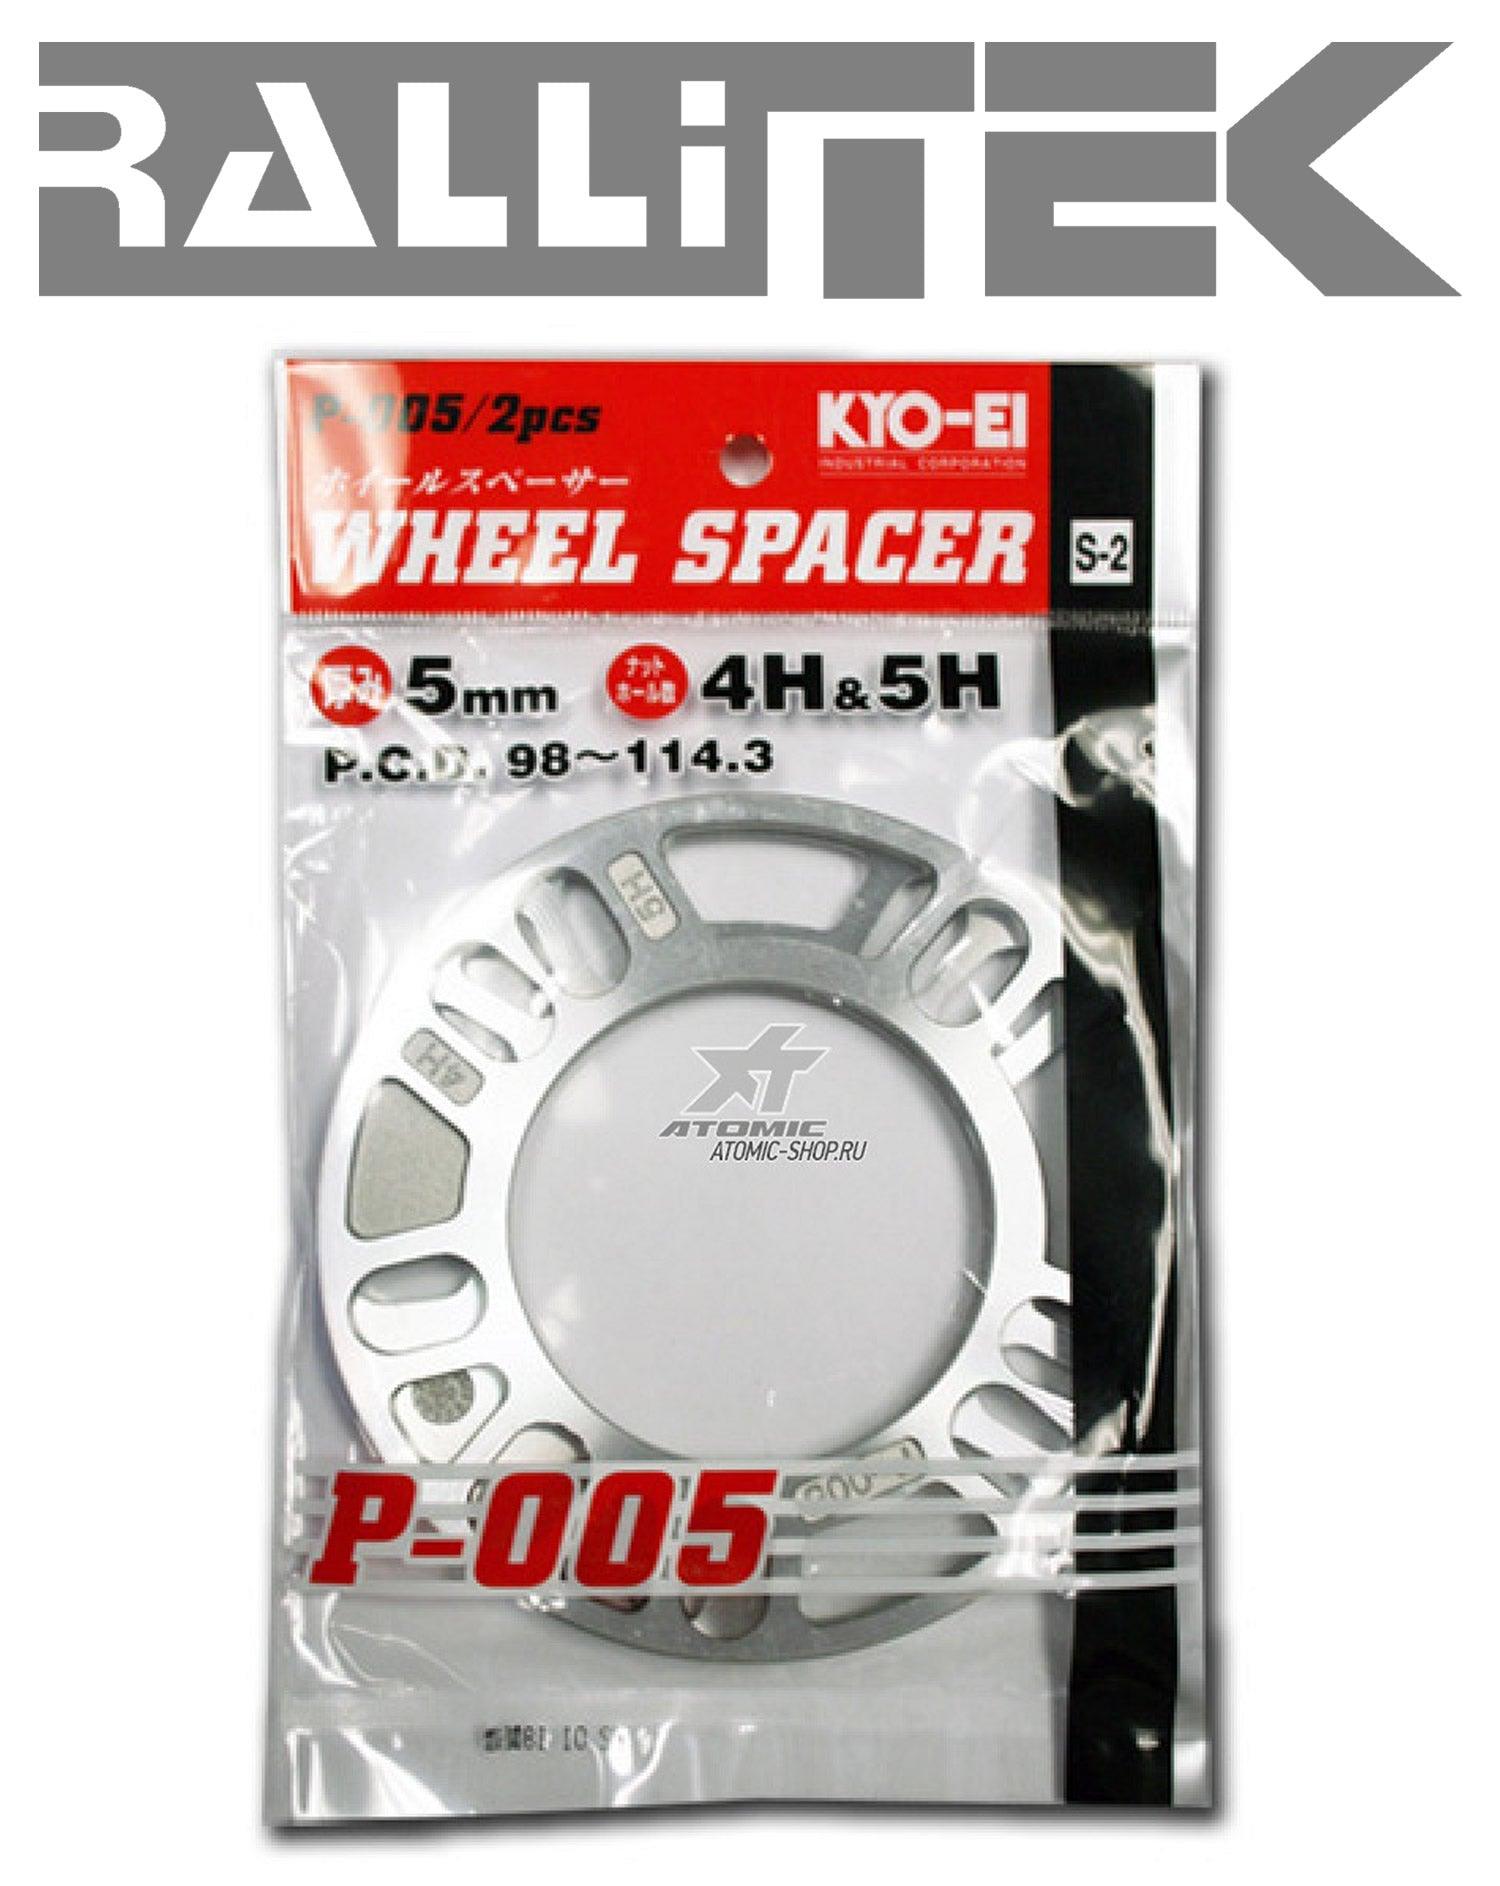 KICS Wheel Spacers 5mm Twin Pack Universal